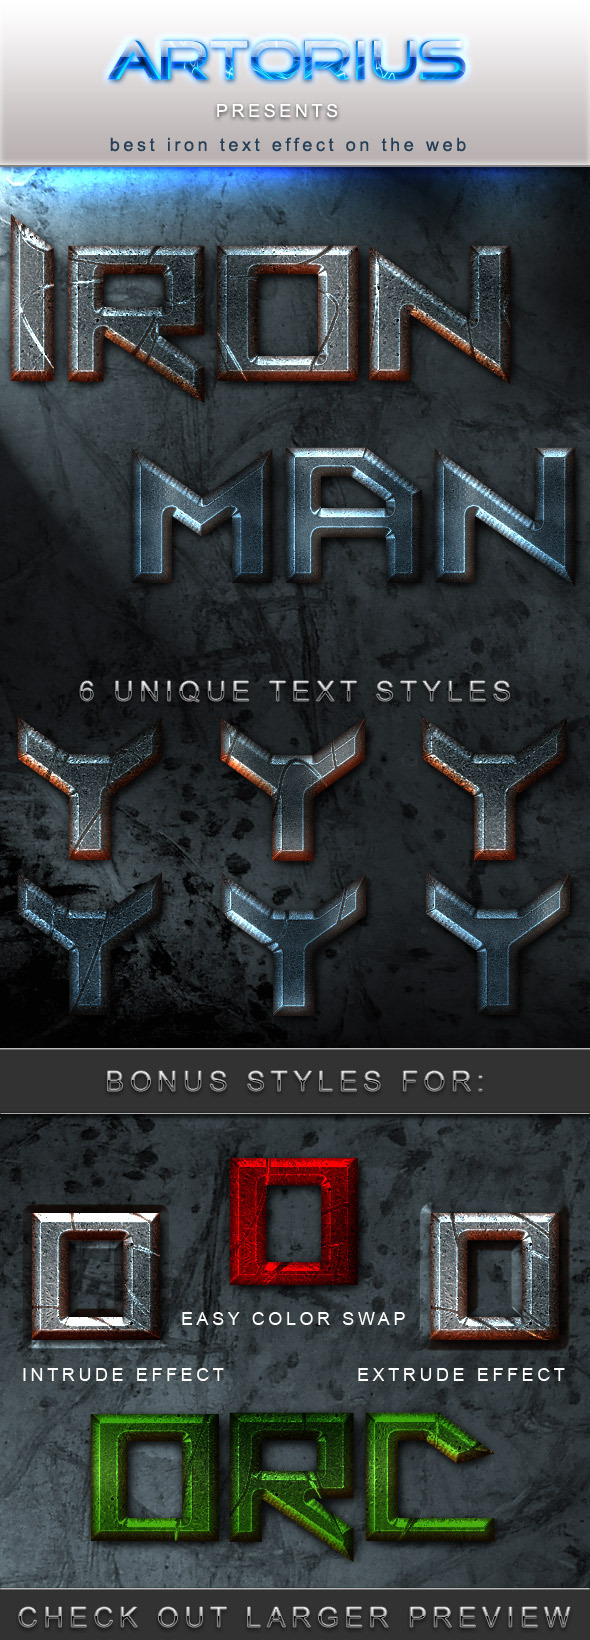 Iron Man Text Styles